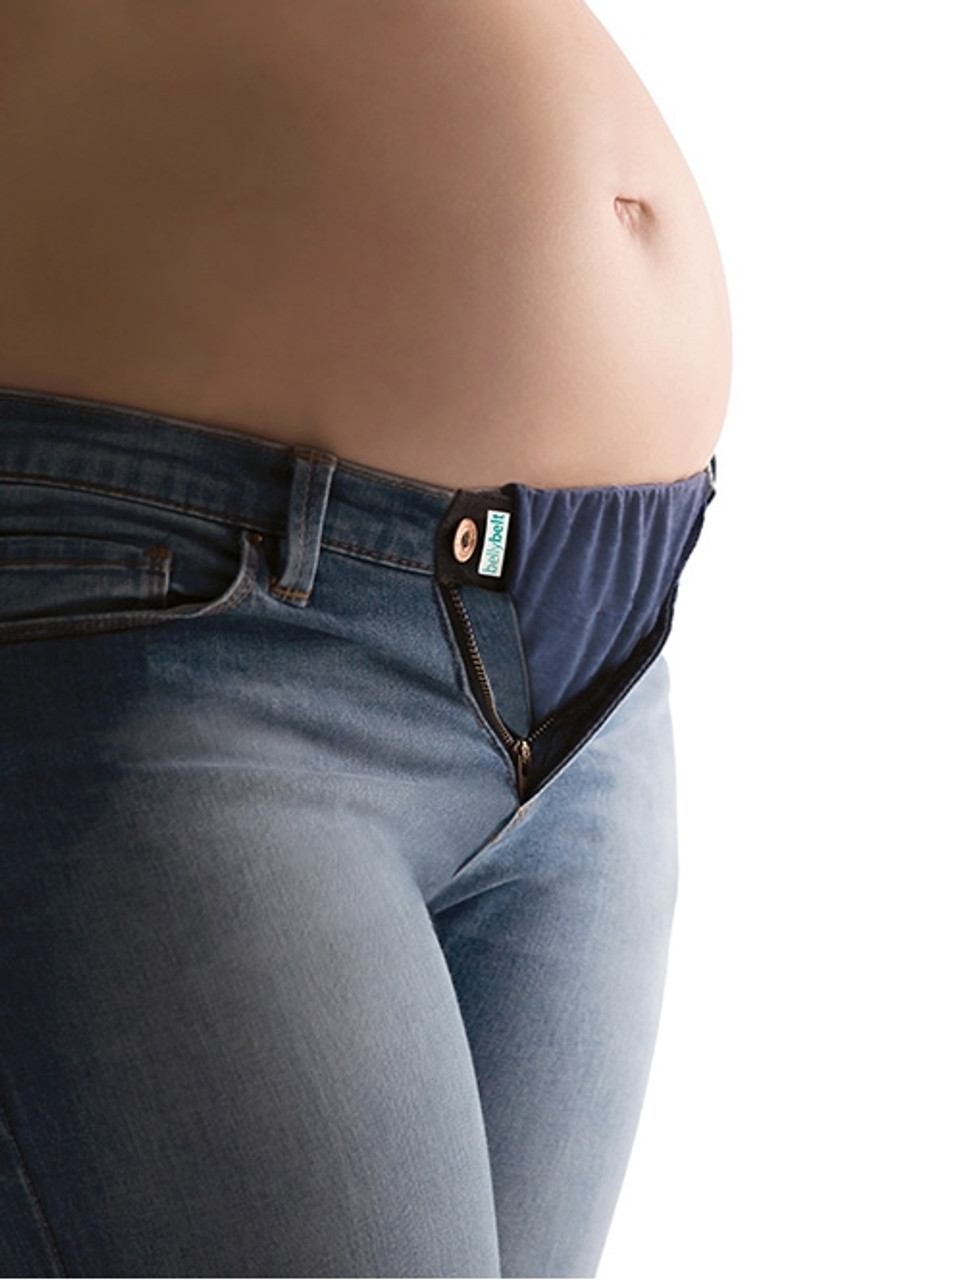 Pants Buckle Extender Pants Pregnancy Waist Extender Waistband Belt Waist  Extend Pant Obese Pregnant Belt Extension Adjustment Elastic Buckle Navy  Blu